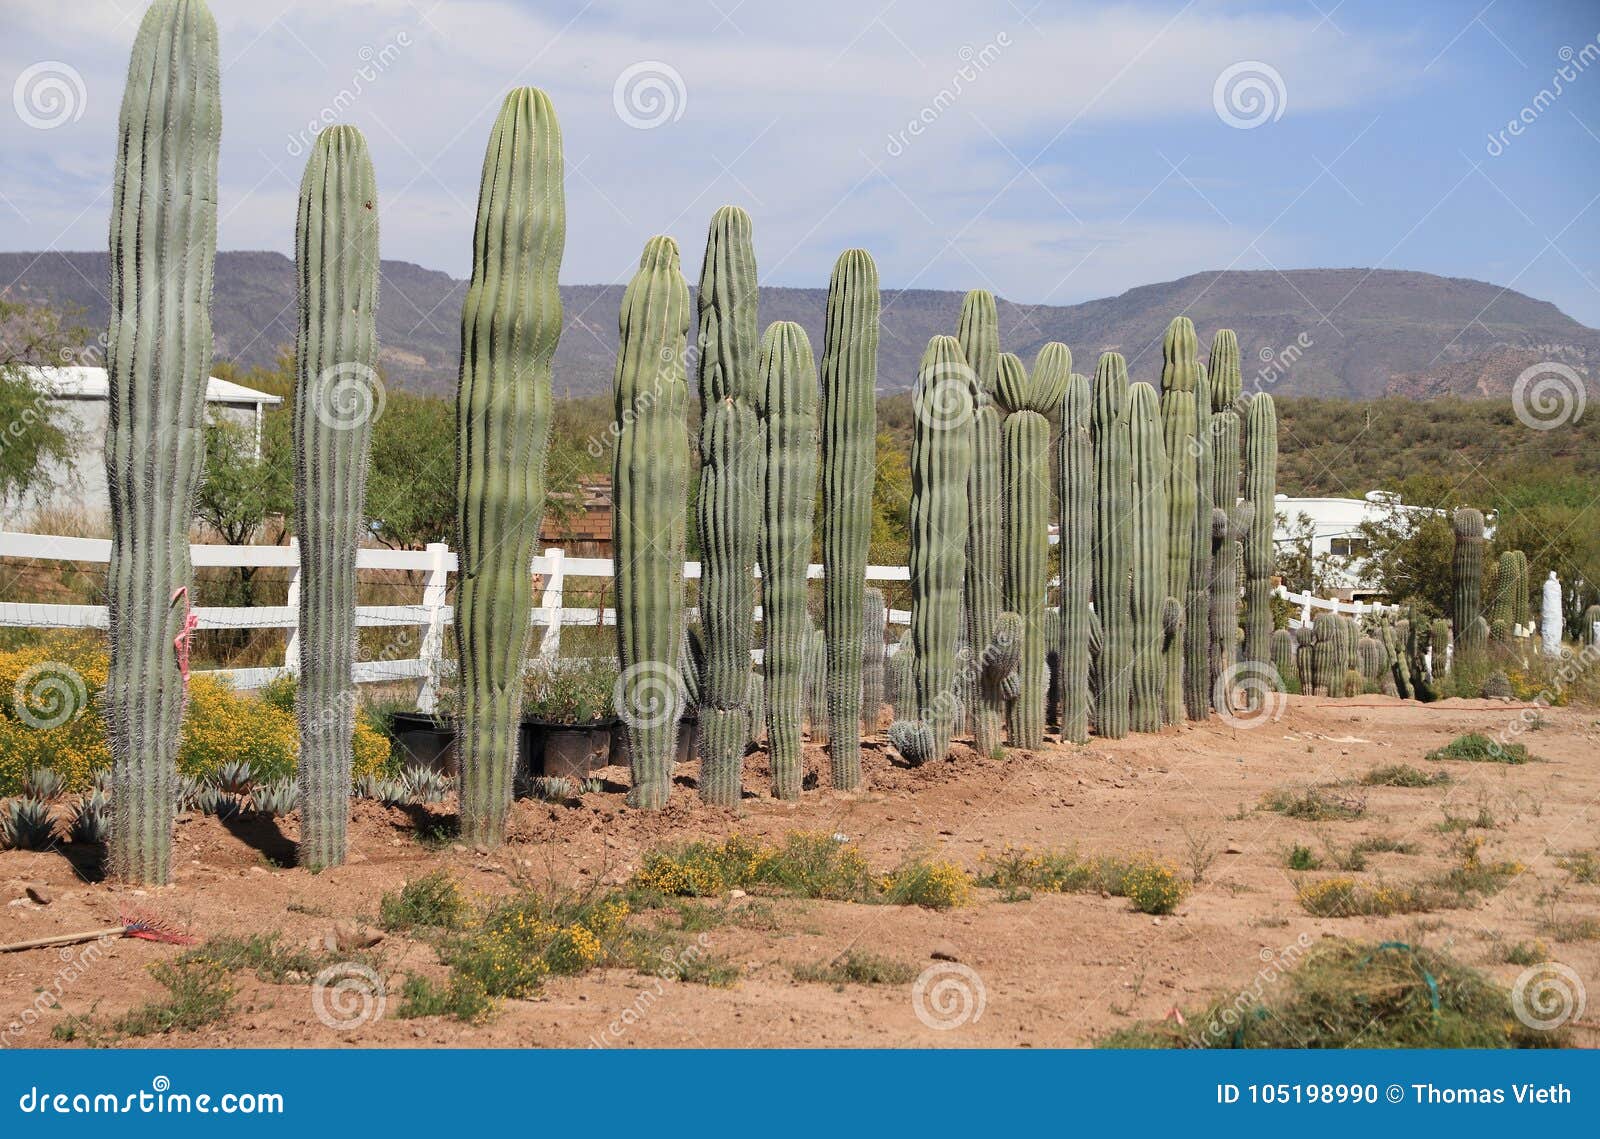 Phoenix/Arizona Desert Plant Nursery   Mature Saguaro Cacti for ...